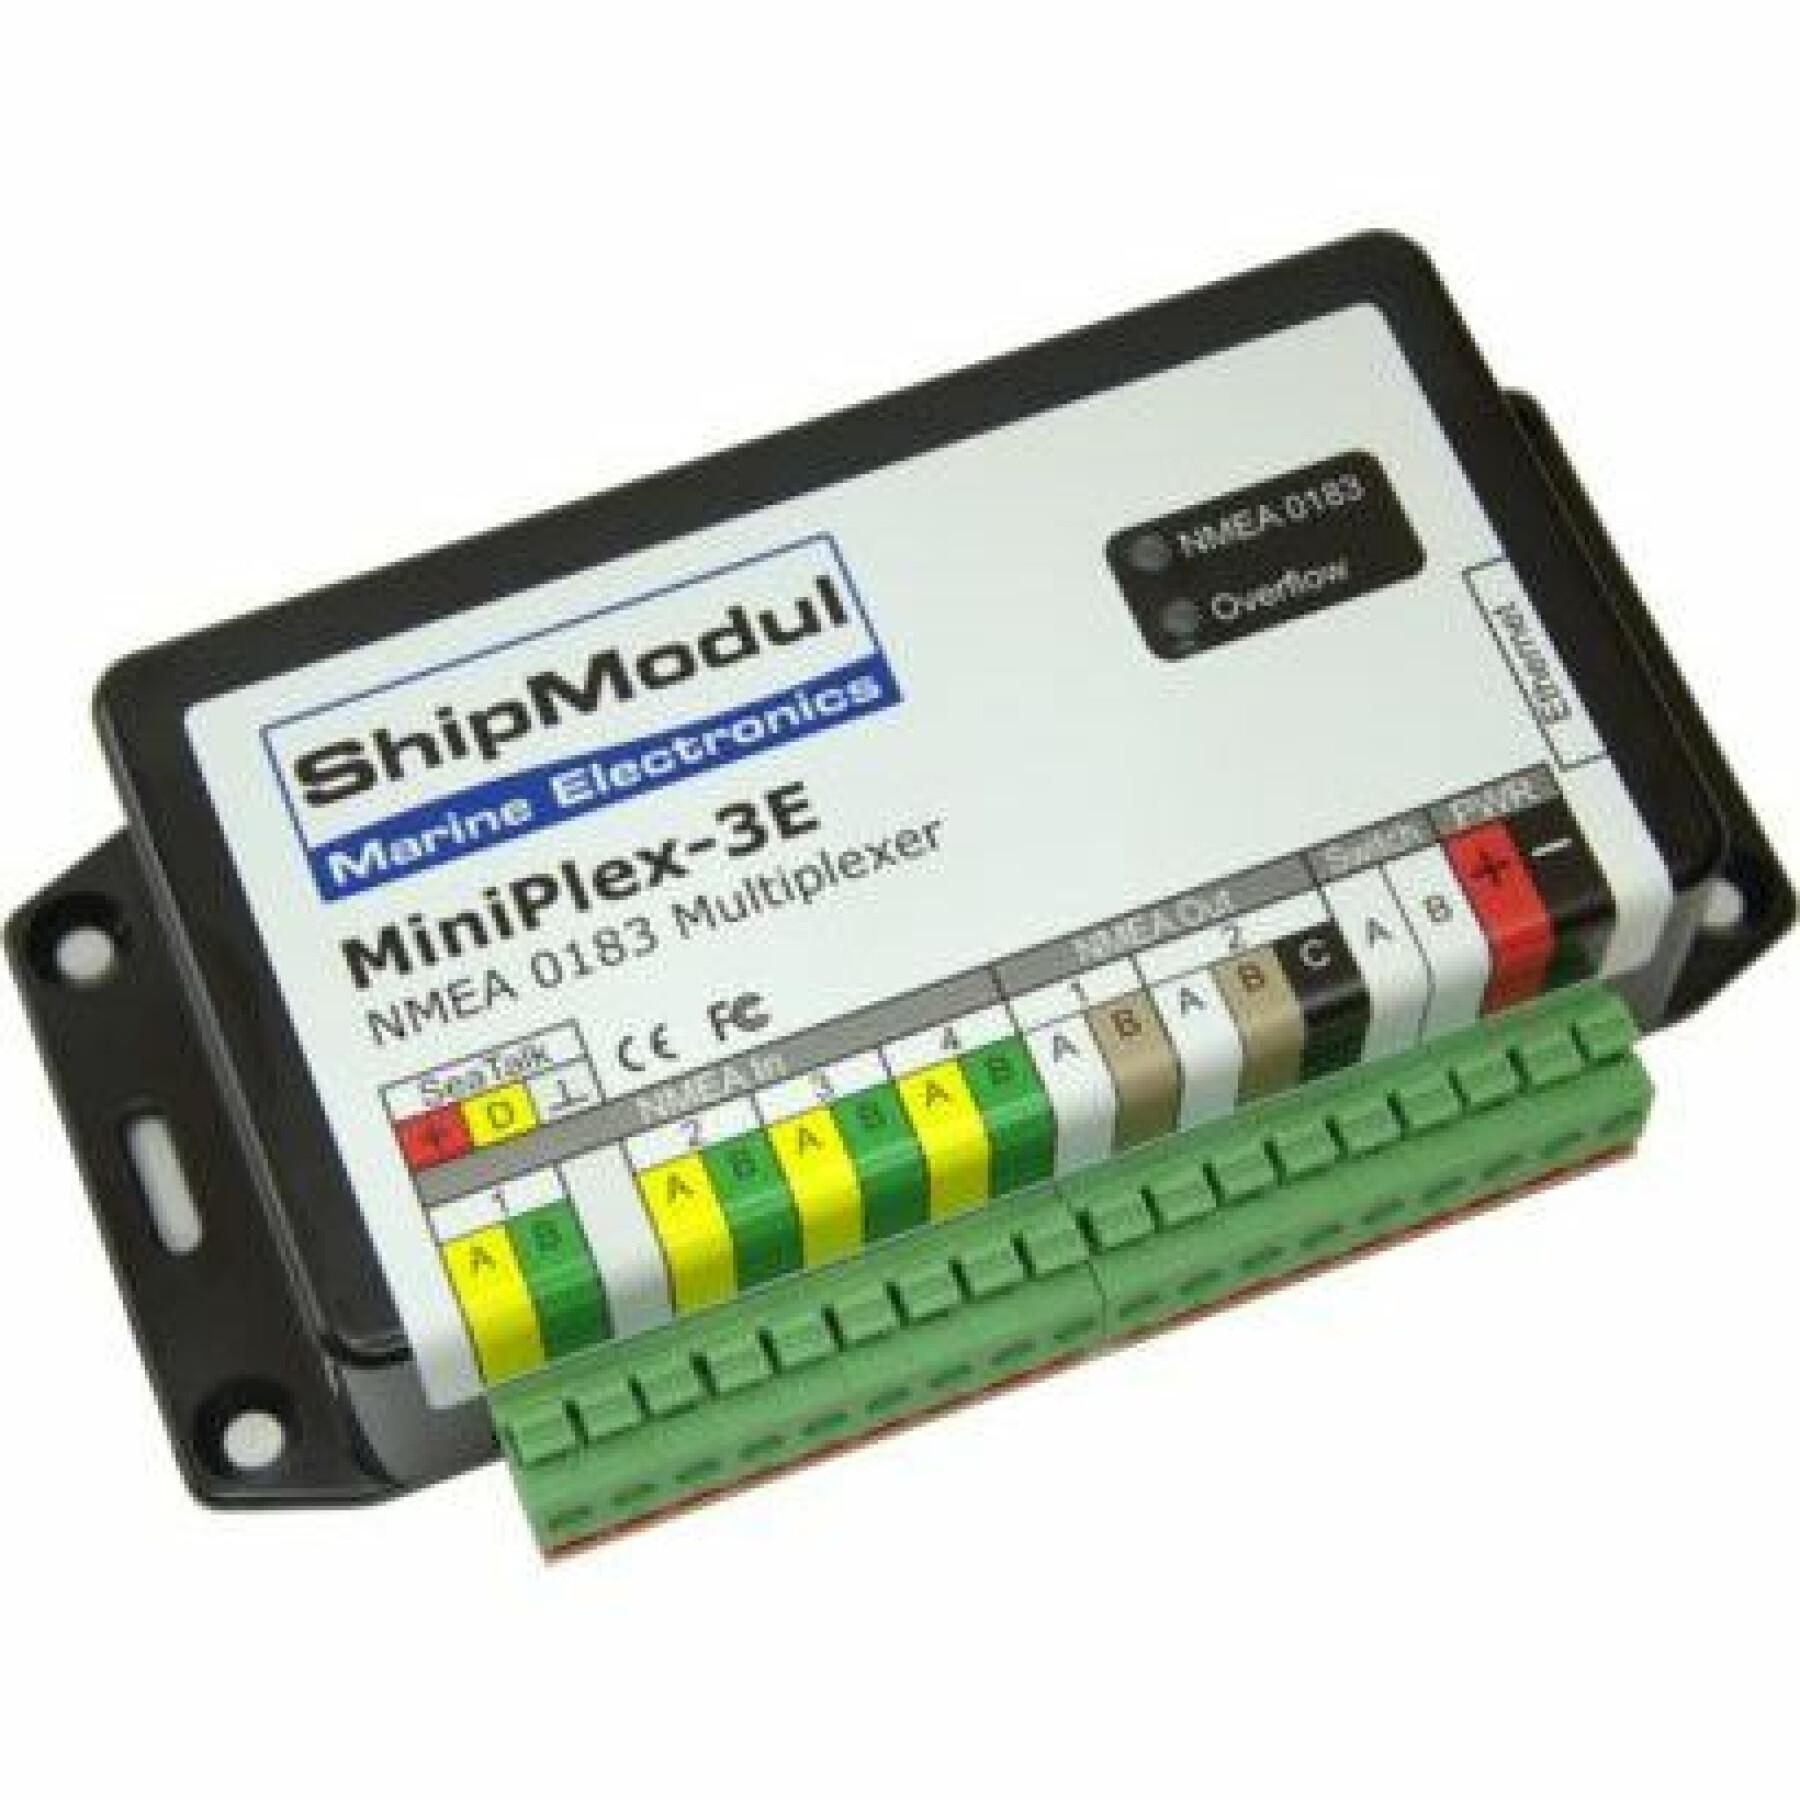 Multiplexer Ethernet-Version ShipModul Miniplex-3E